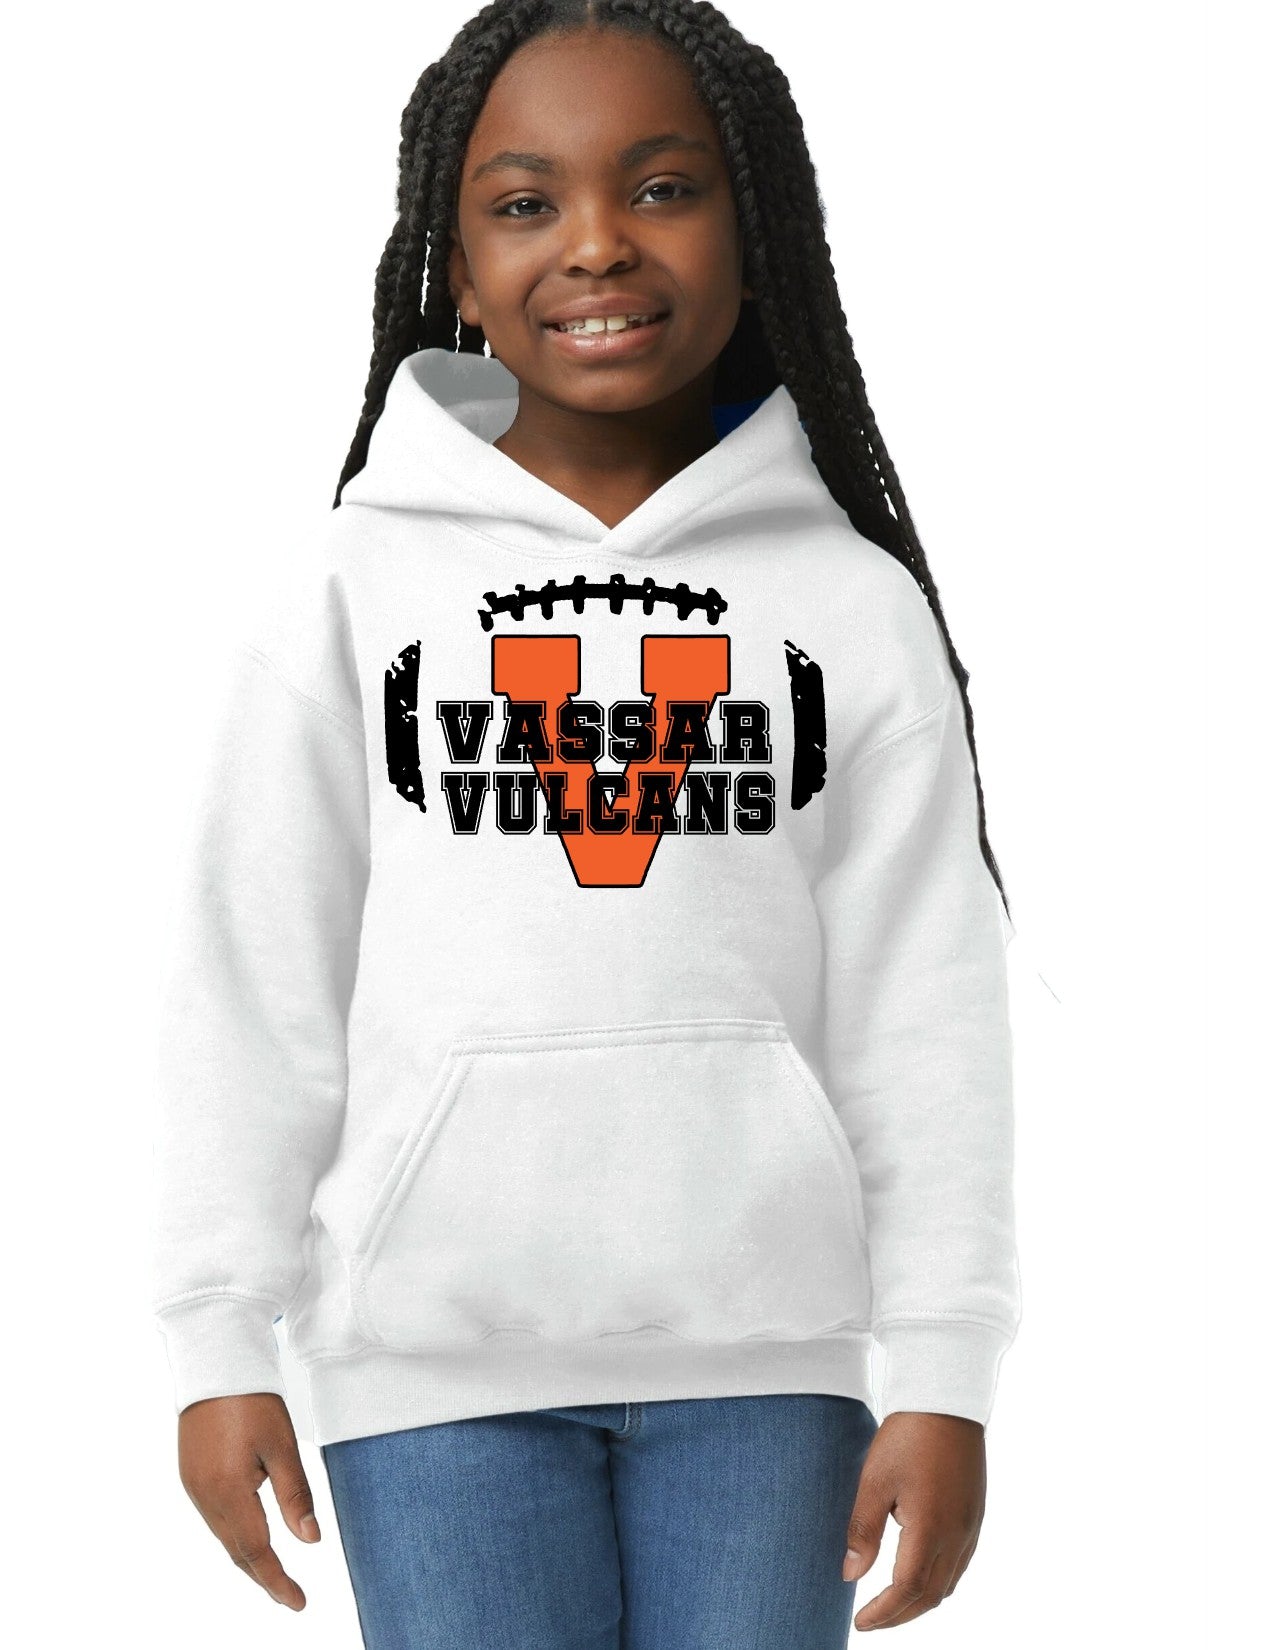 Vassar Football Youth Hoodie